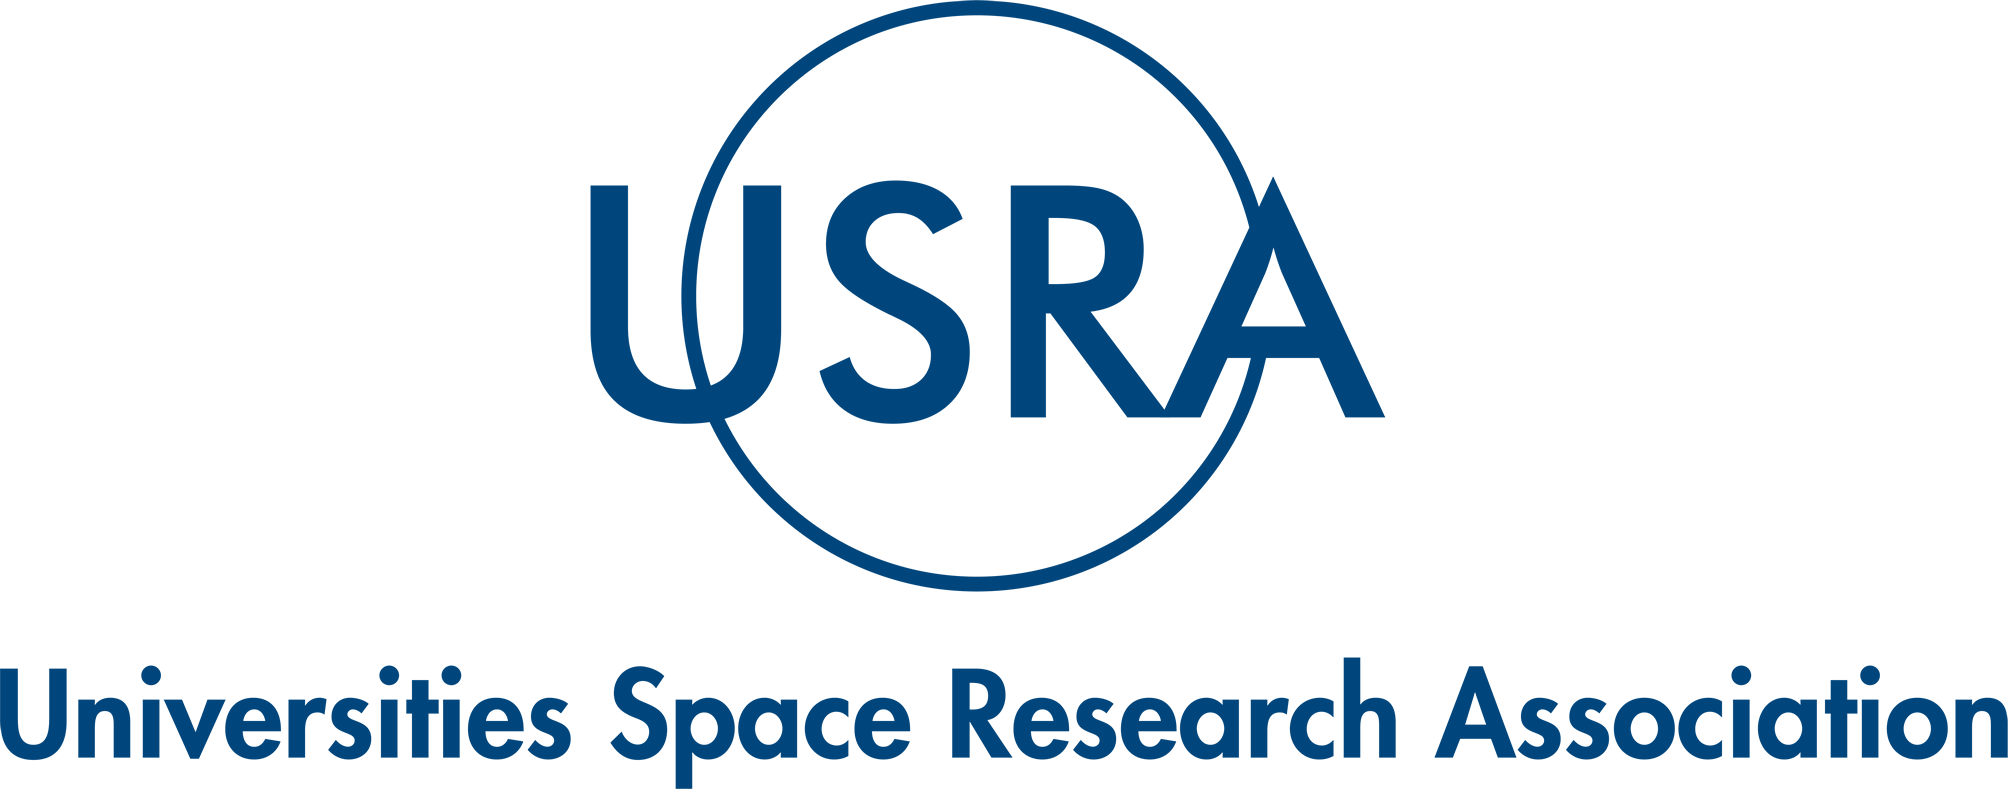 Universities Space Research Association - USRA